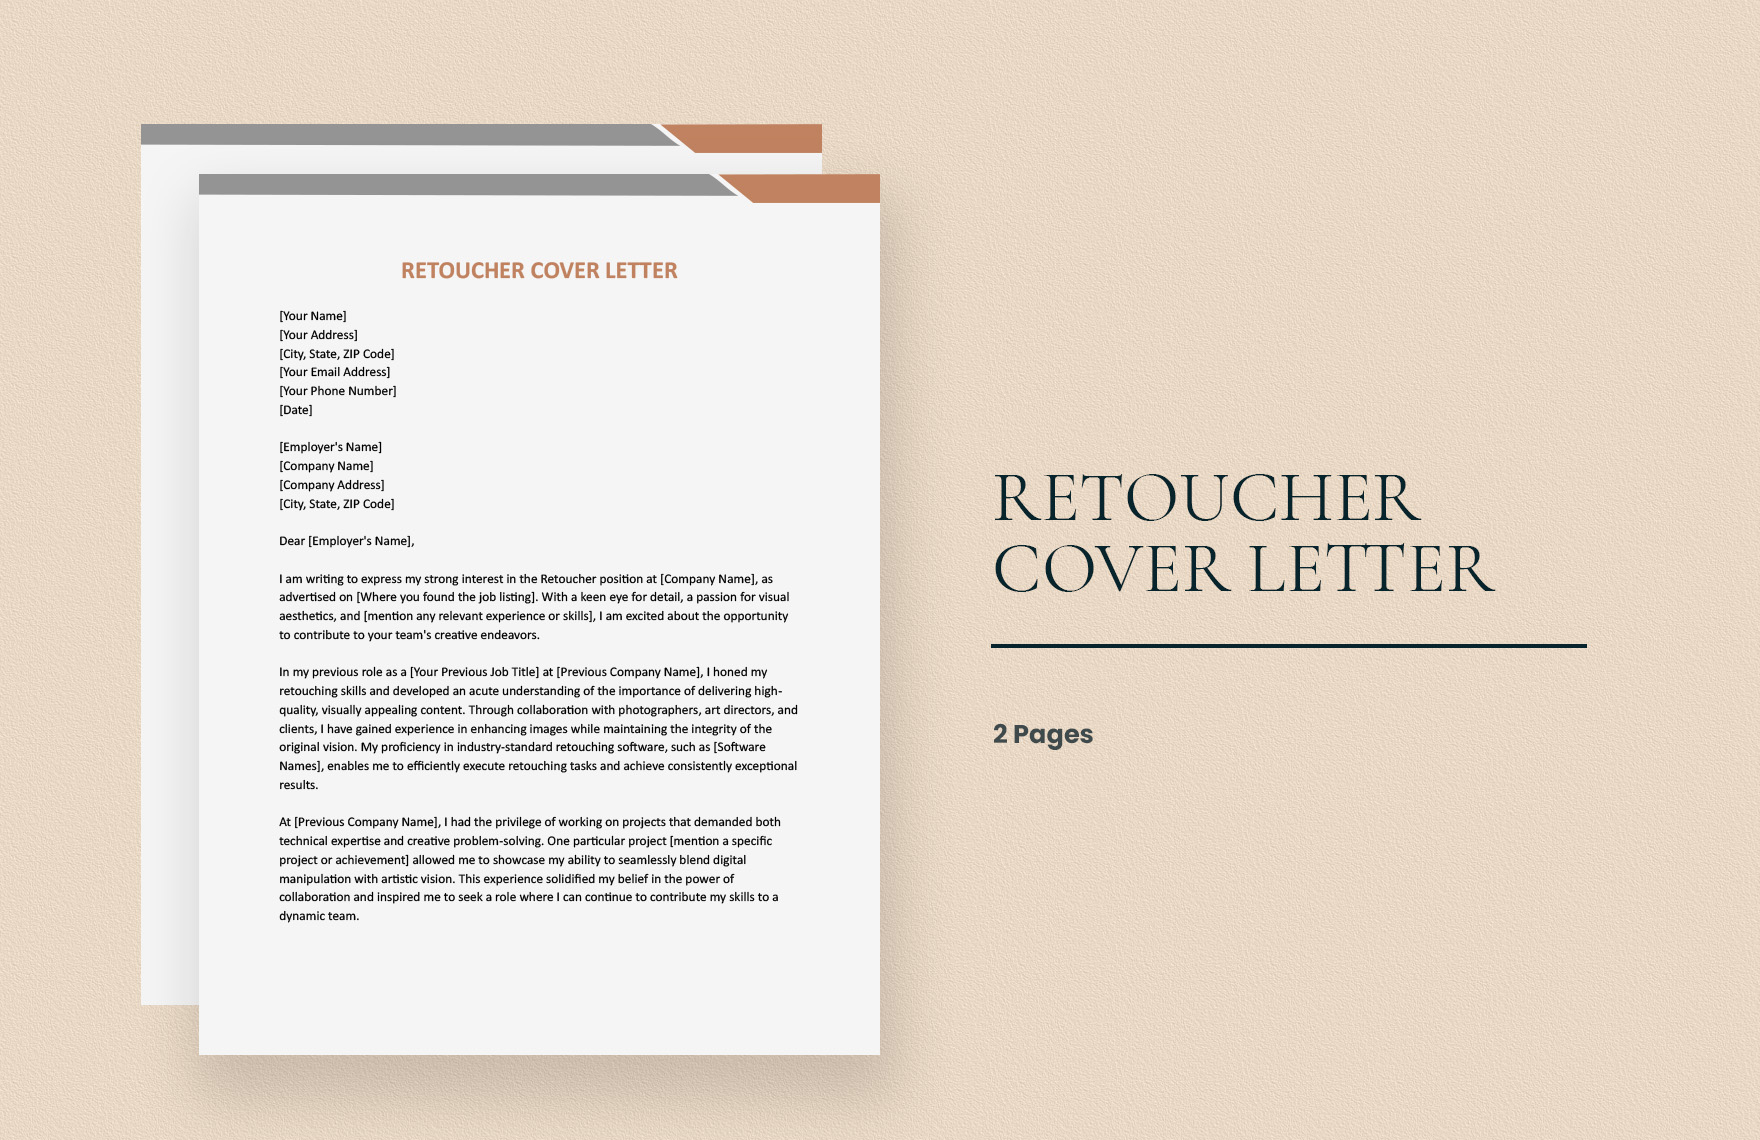 Retoucher Cover Letter in Word, Google Docs